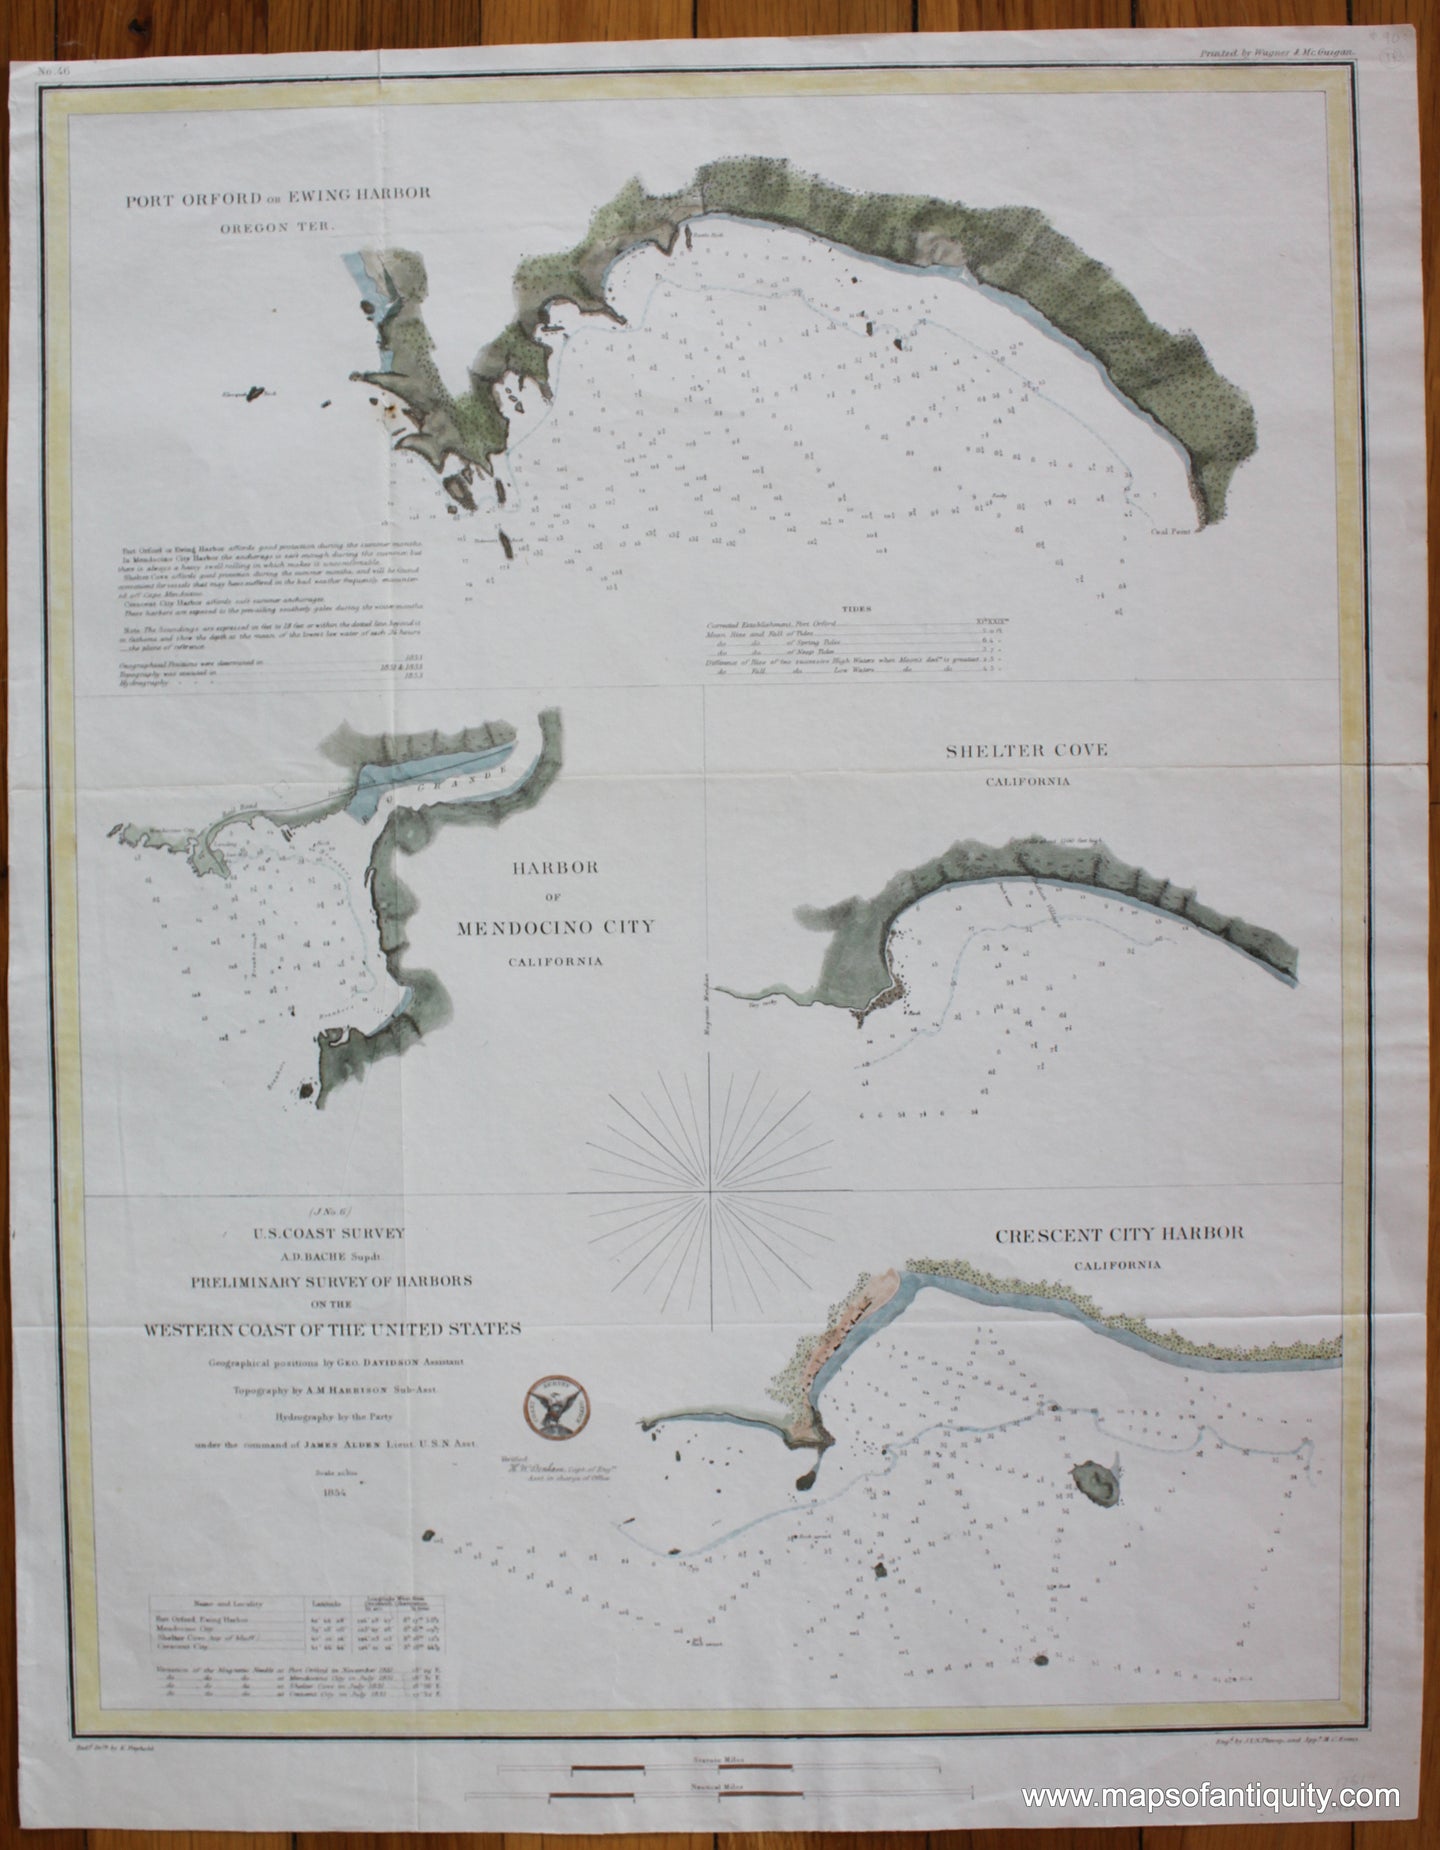 Hand-Colored-Antique-Coast-Chart-J-No.-6-Preliminary-Survey-of-Harbors-on-the-Western-Coast-of-the-United-States-Nautical-Charts-Coastal-Report-Charts-1854-US-Coast-Survey-Maps-Of-Antiquity